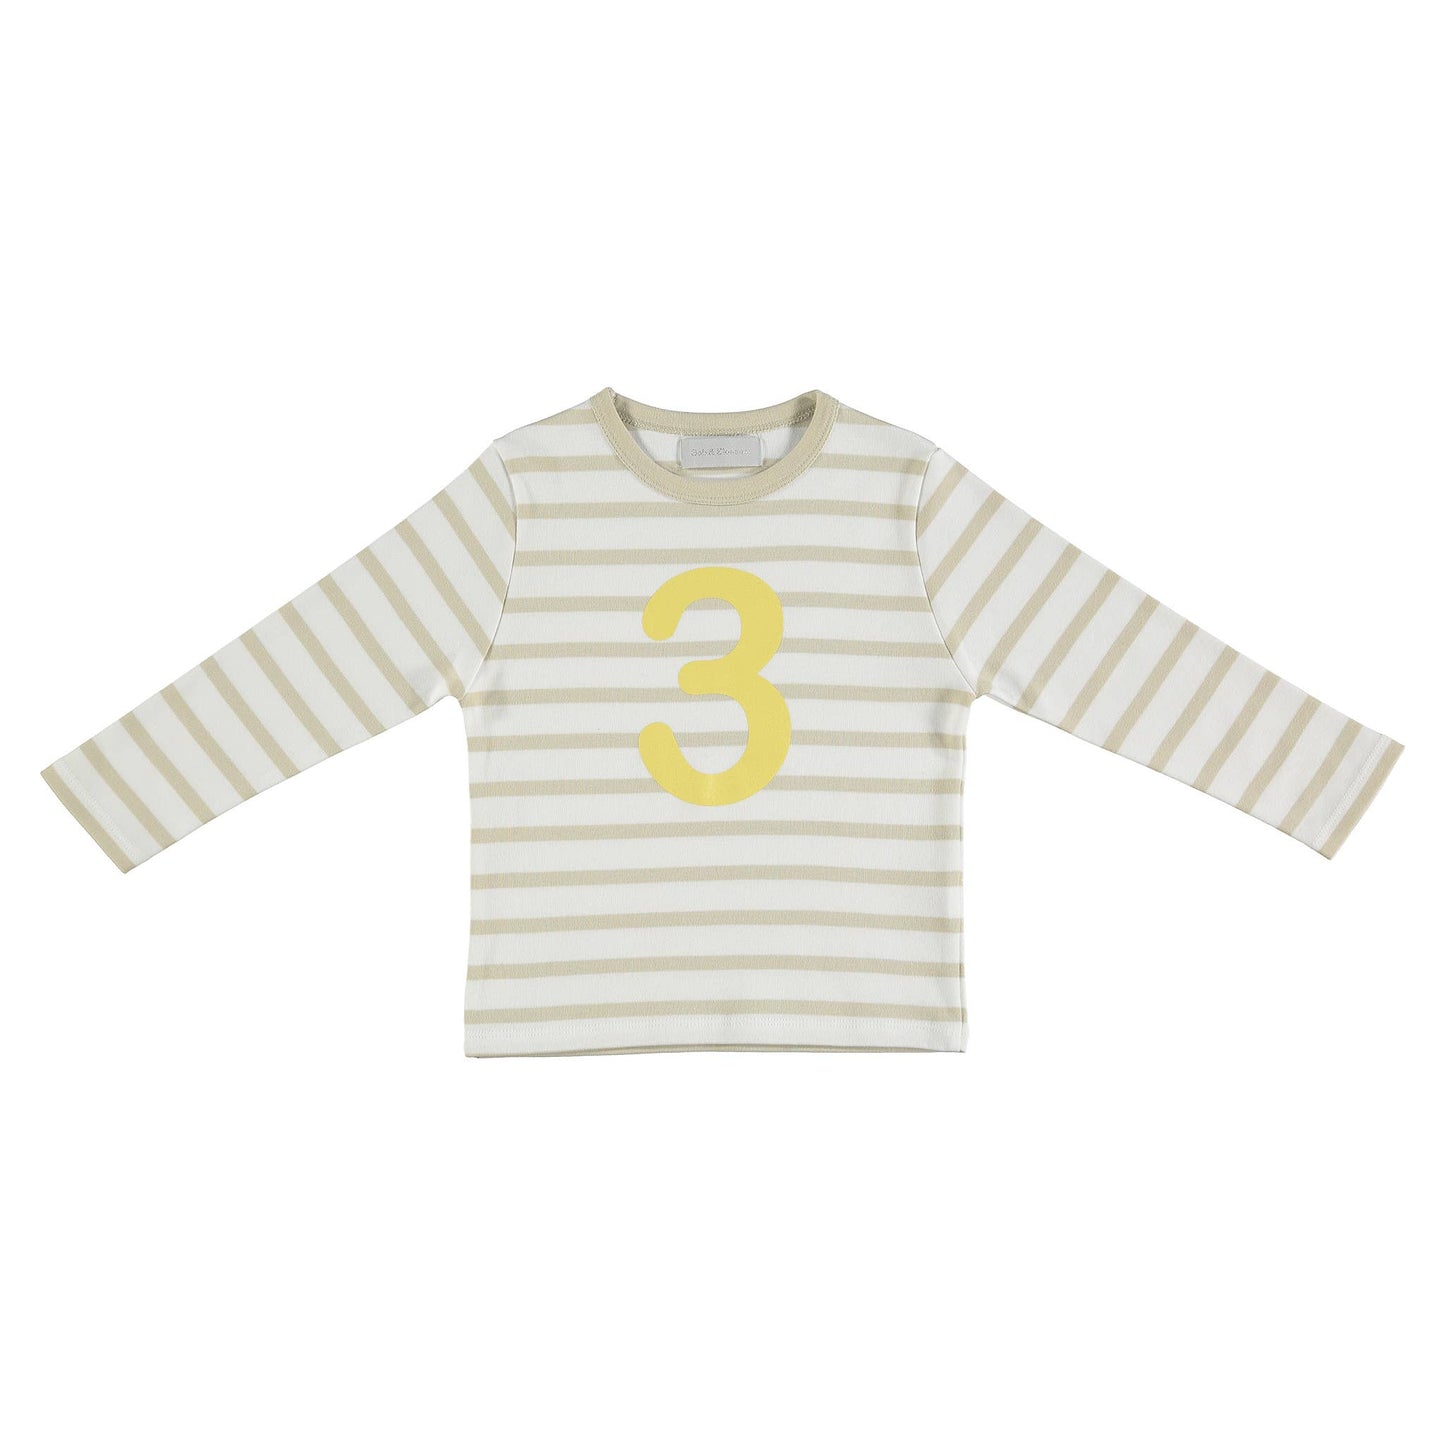 Sand & White Striped 3 (Yellow) Shirt